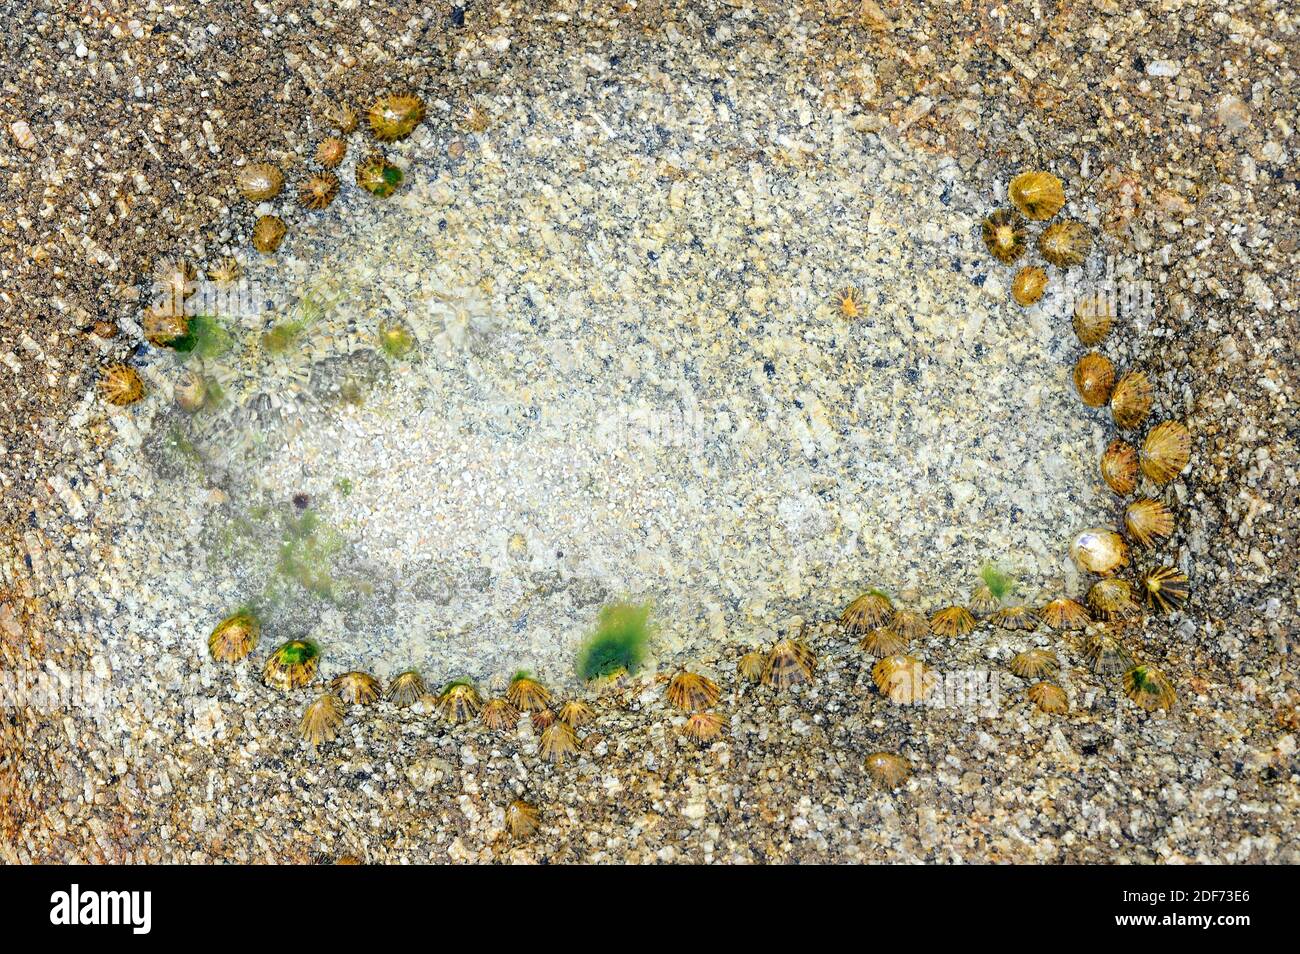 El limpet común (Patella vulgata) es un molusco marino comestible. Esta foto ha sido tomada en la costa de Bretaña, Francia. Foto de stock